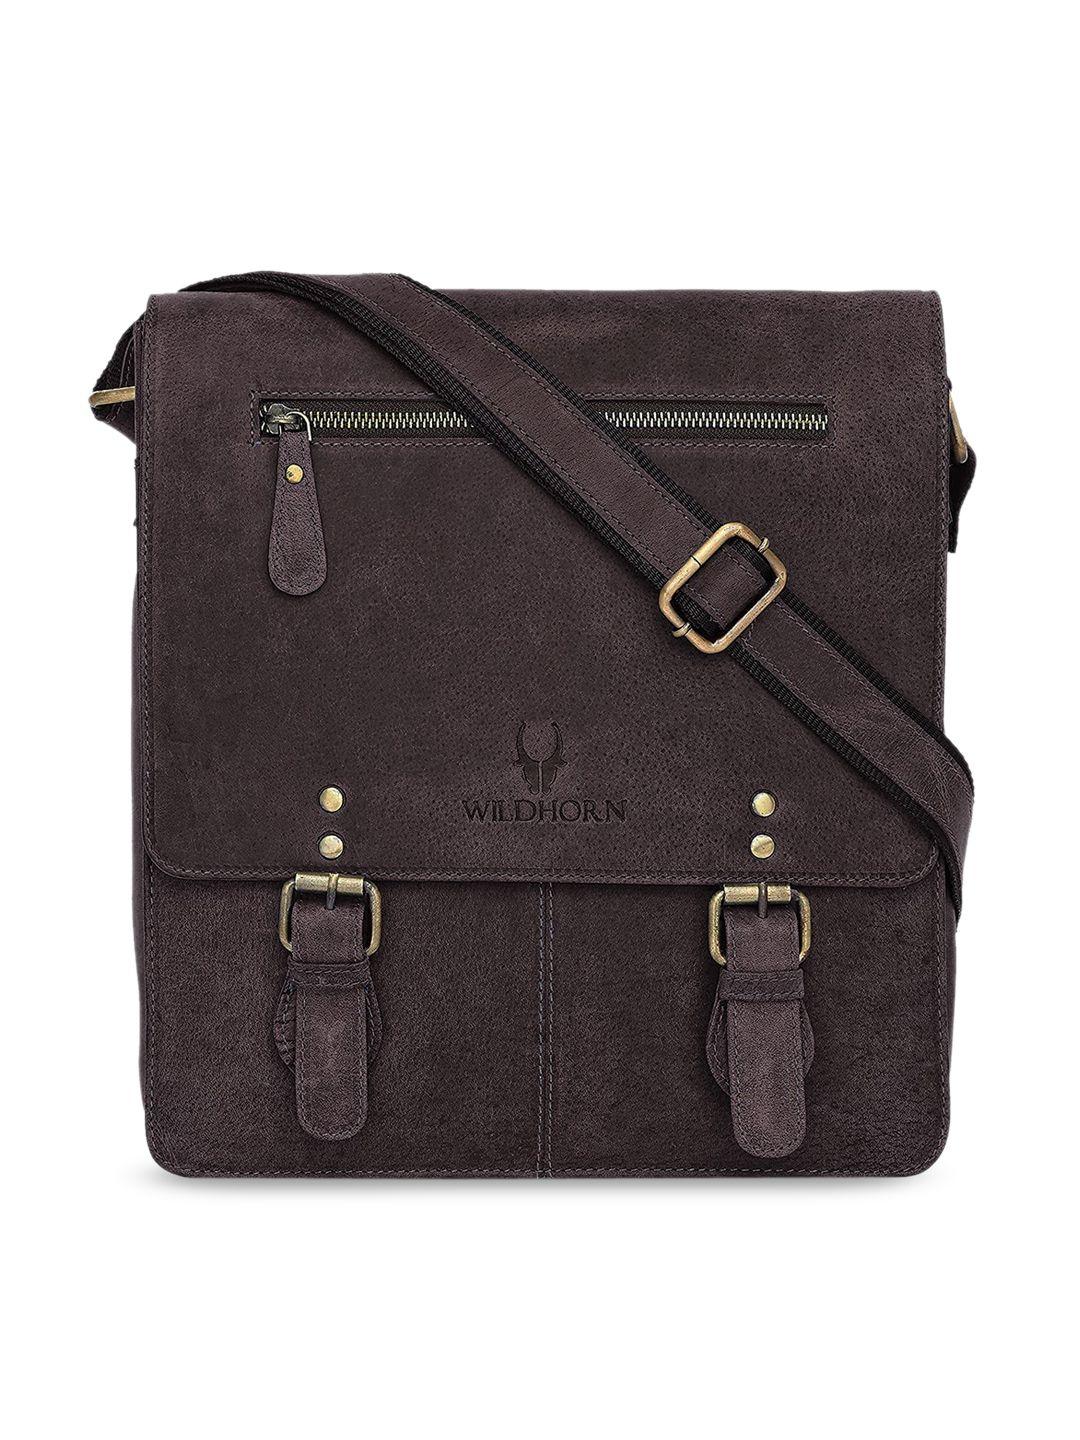 wildhorn brown leather structured sling bag